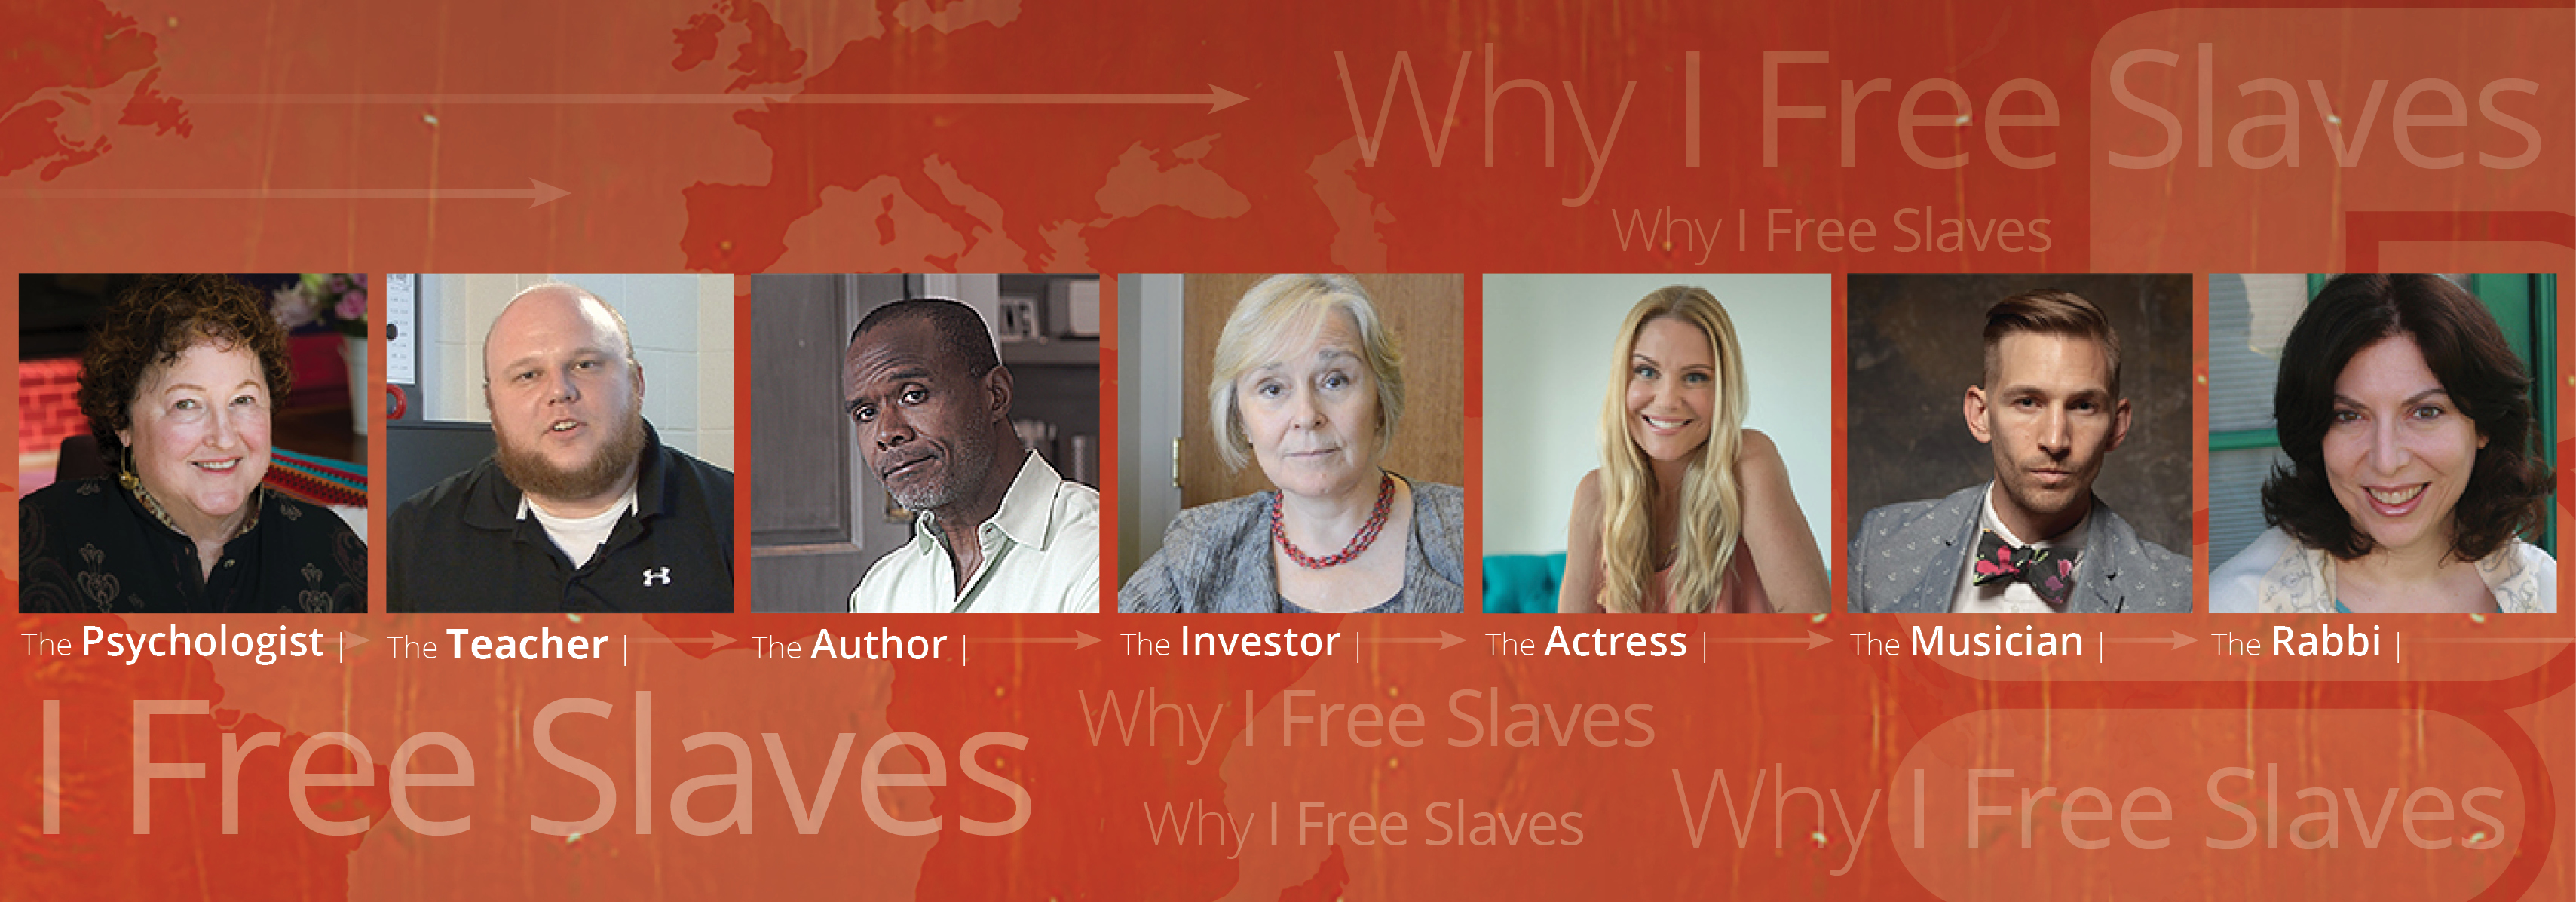 Why I Free Slaves: Teacher Robert Birk